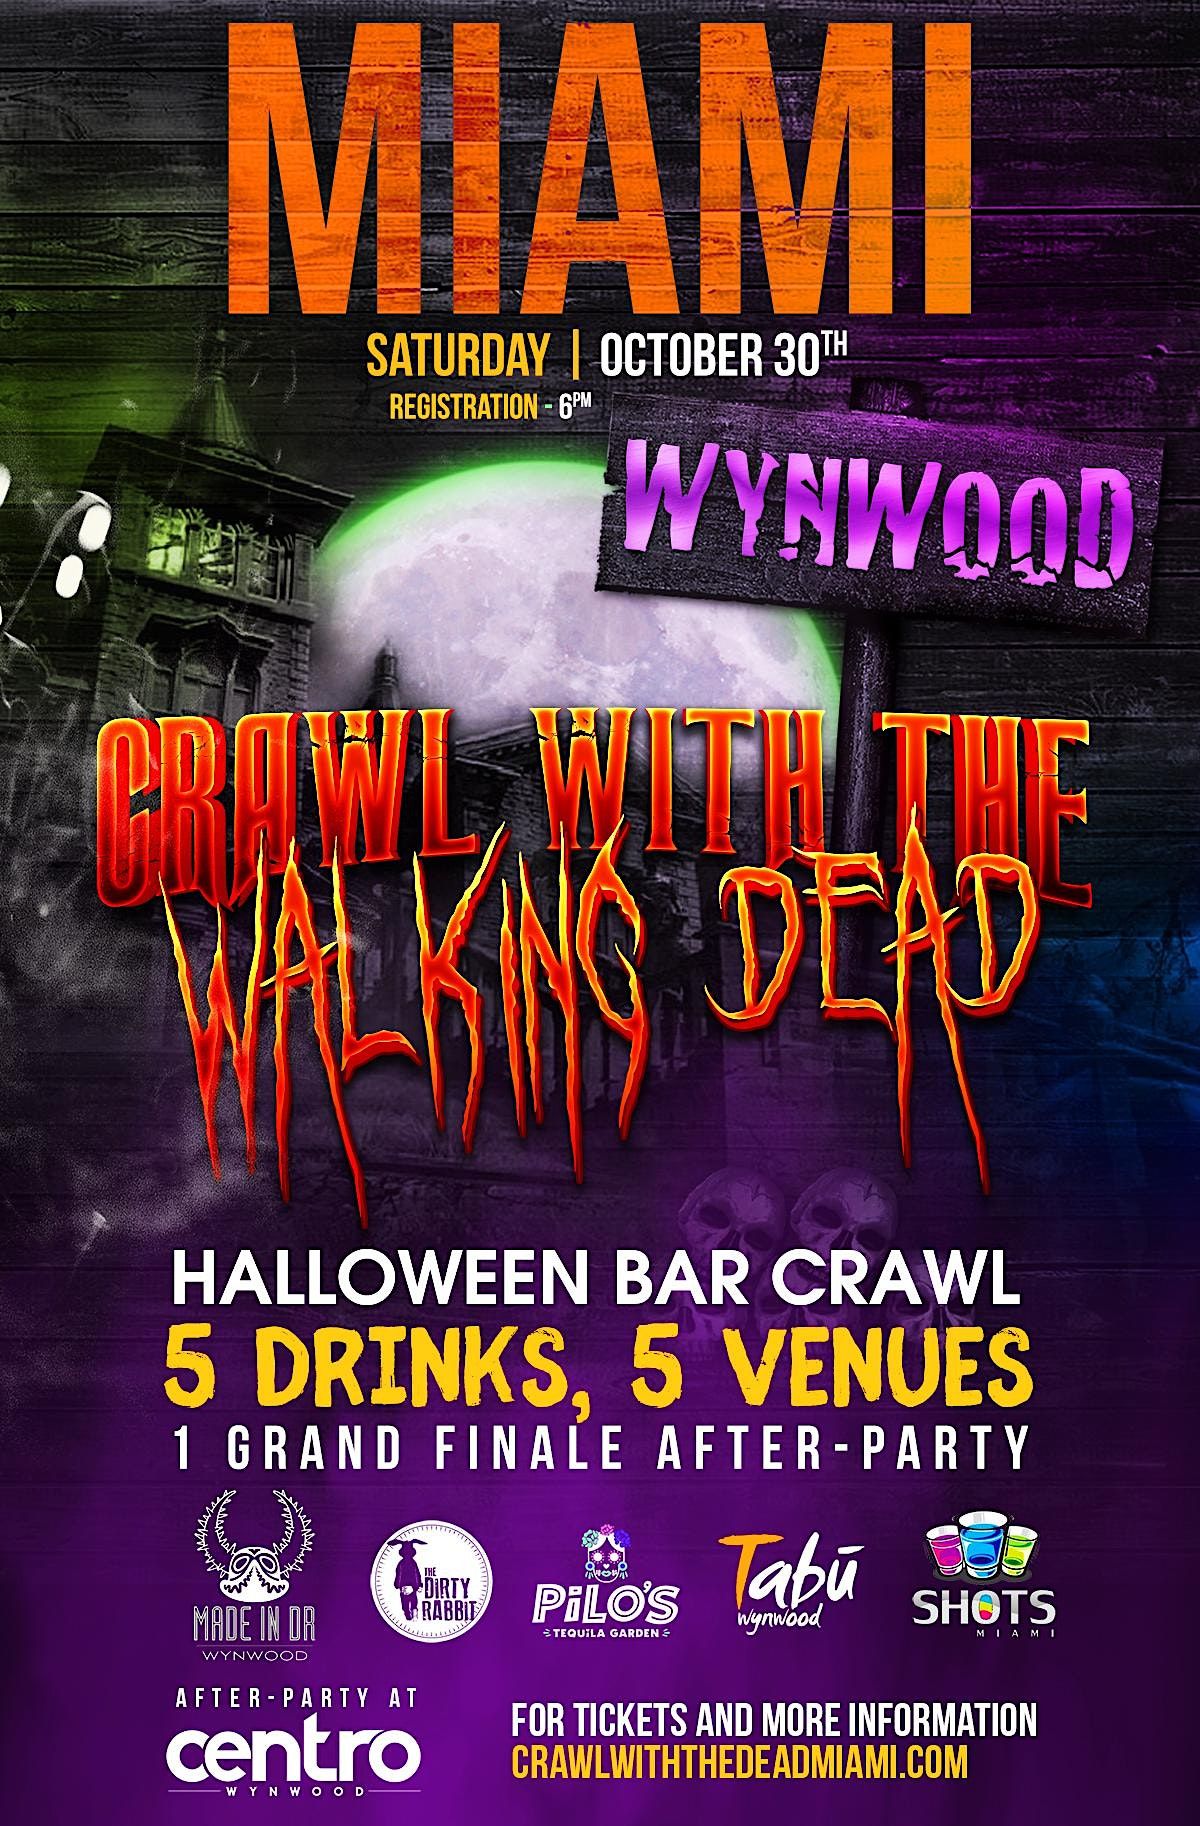 Wynwood Bar Crawl with the Walking Dead Halloween, Shots Miami, 29